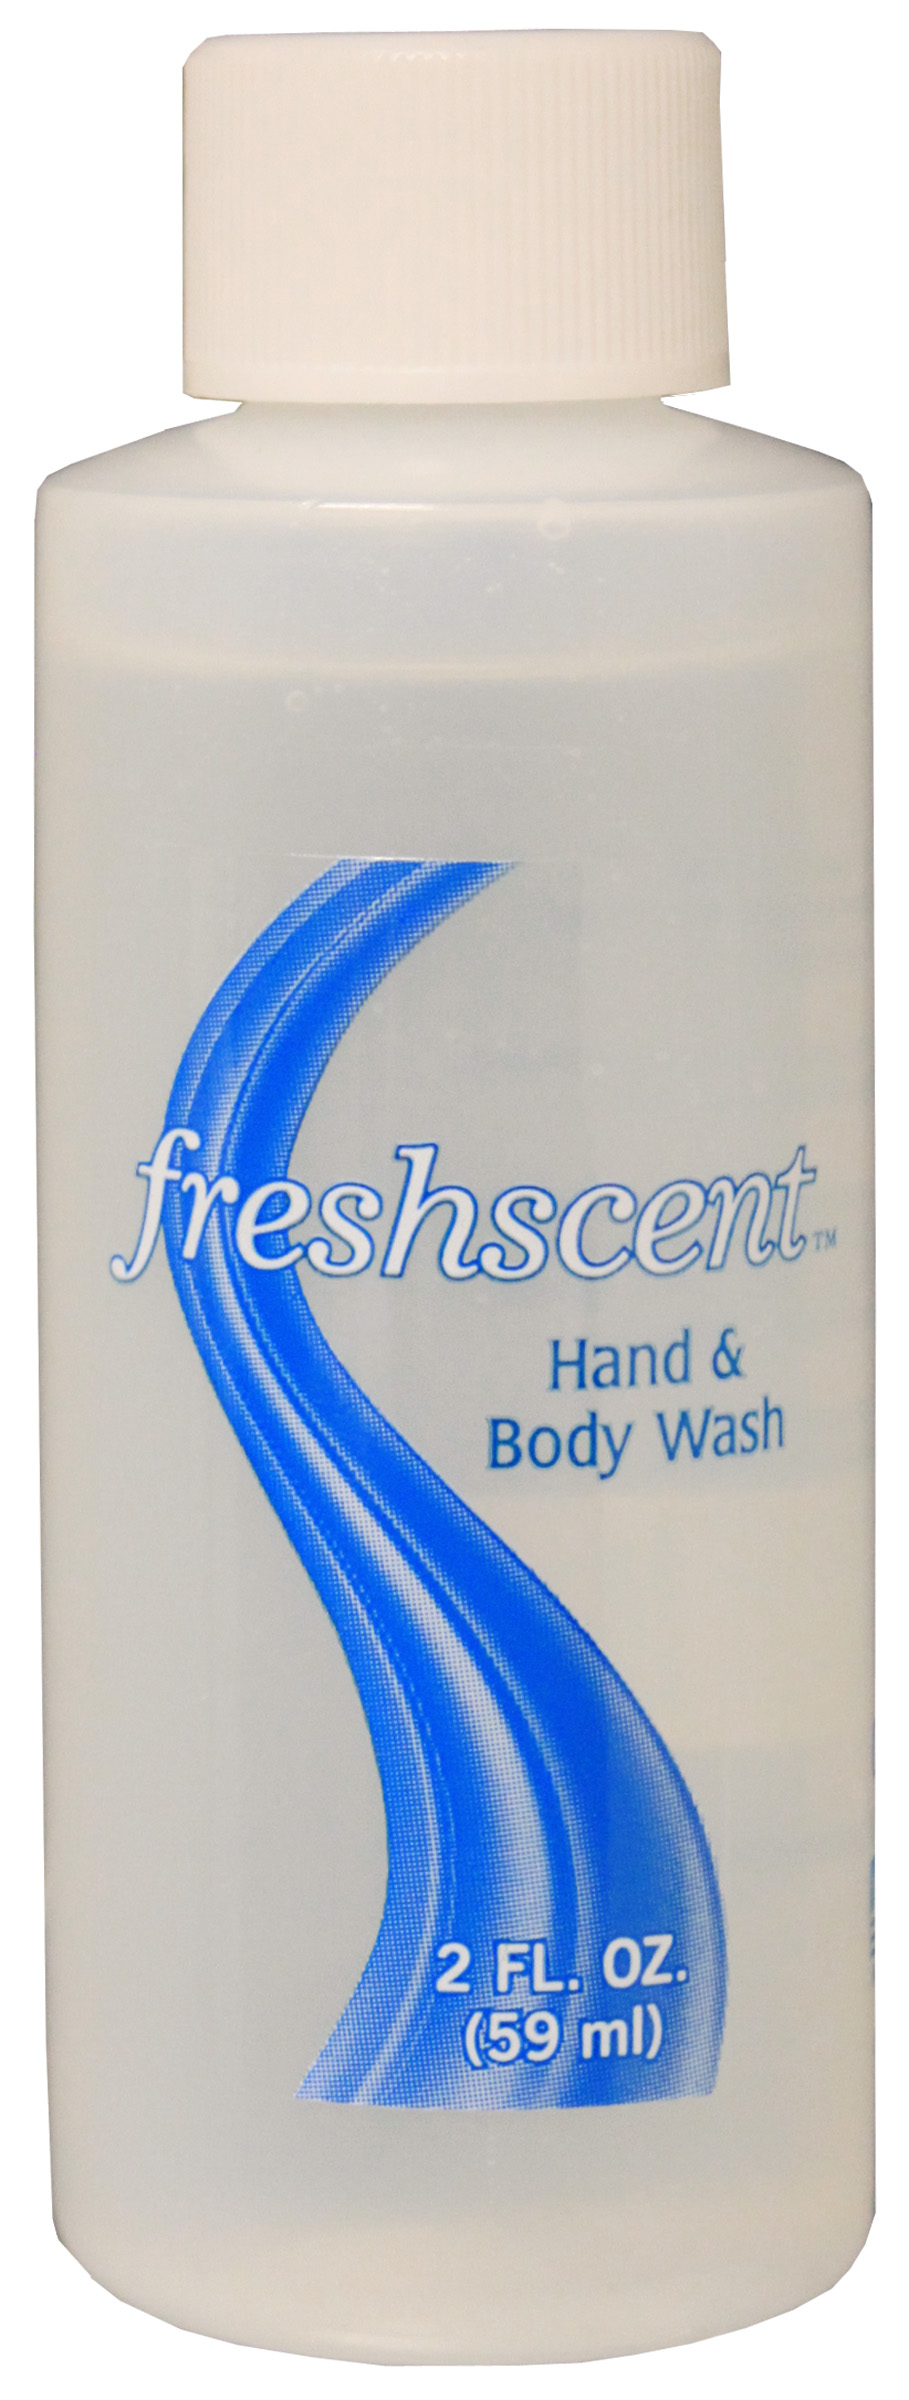 Freshscent 2 oz. Hand & Body Wash